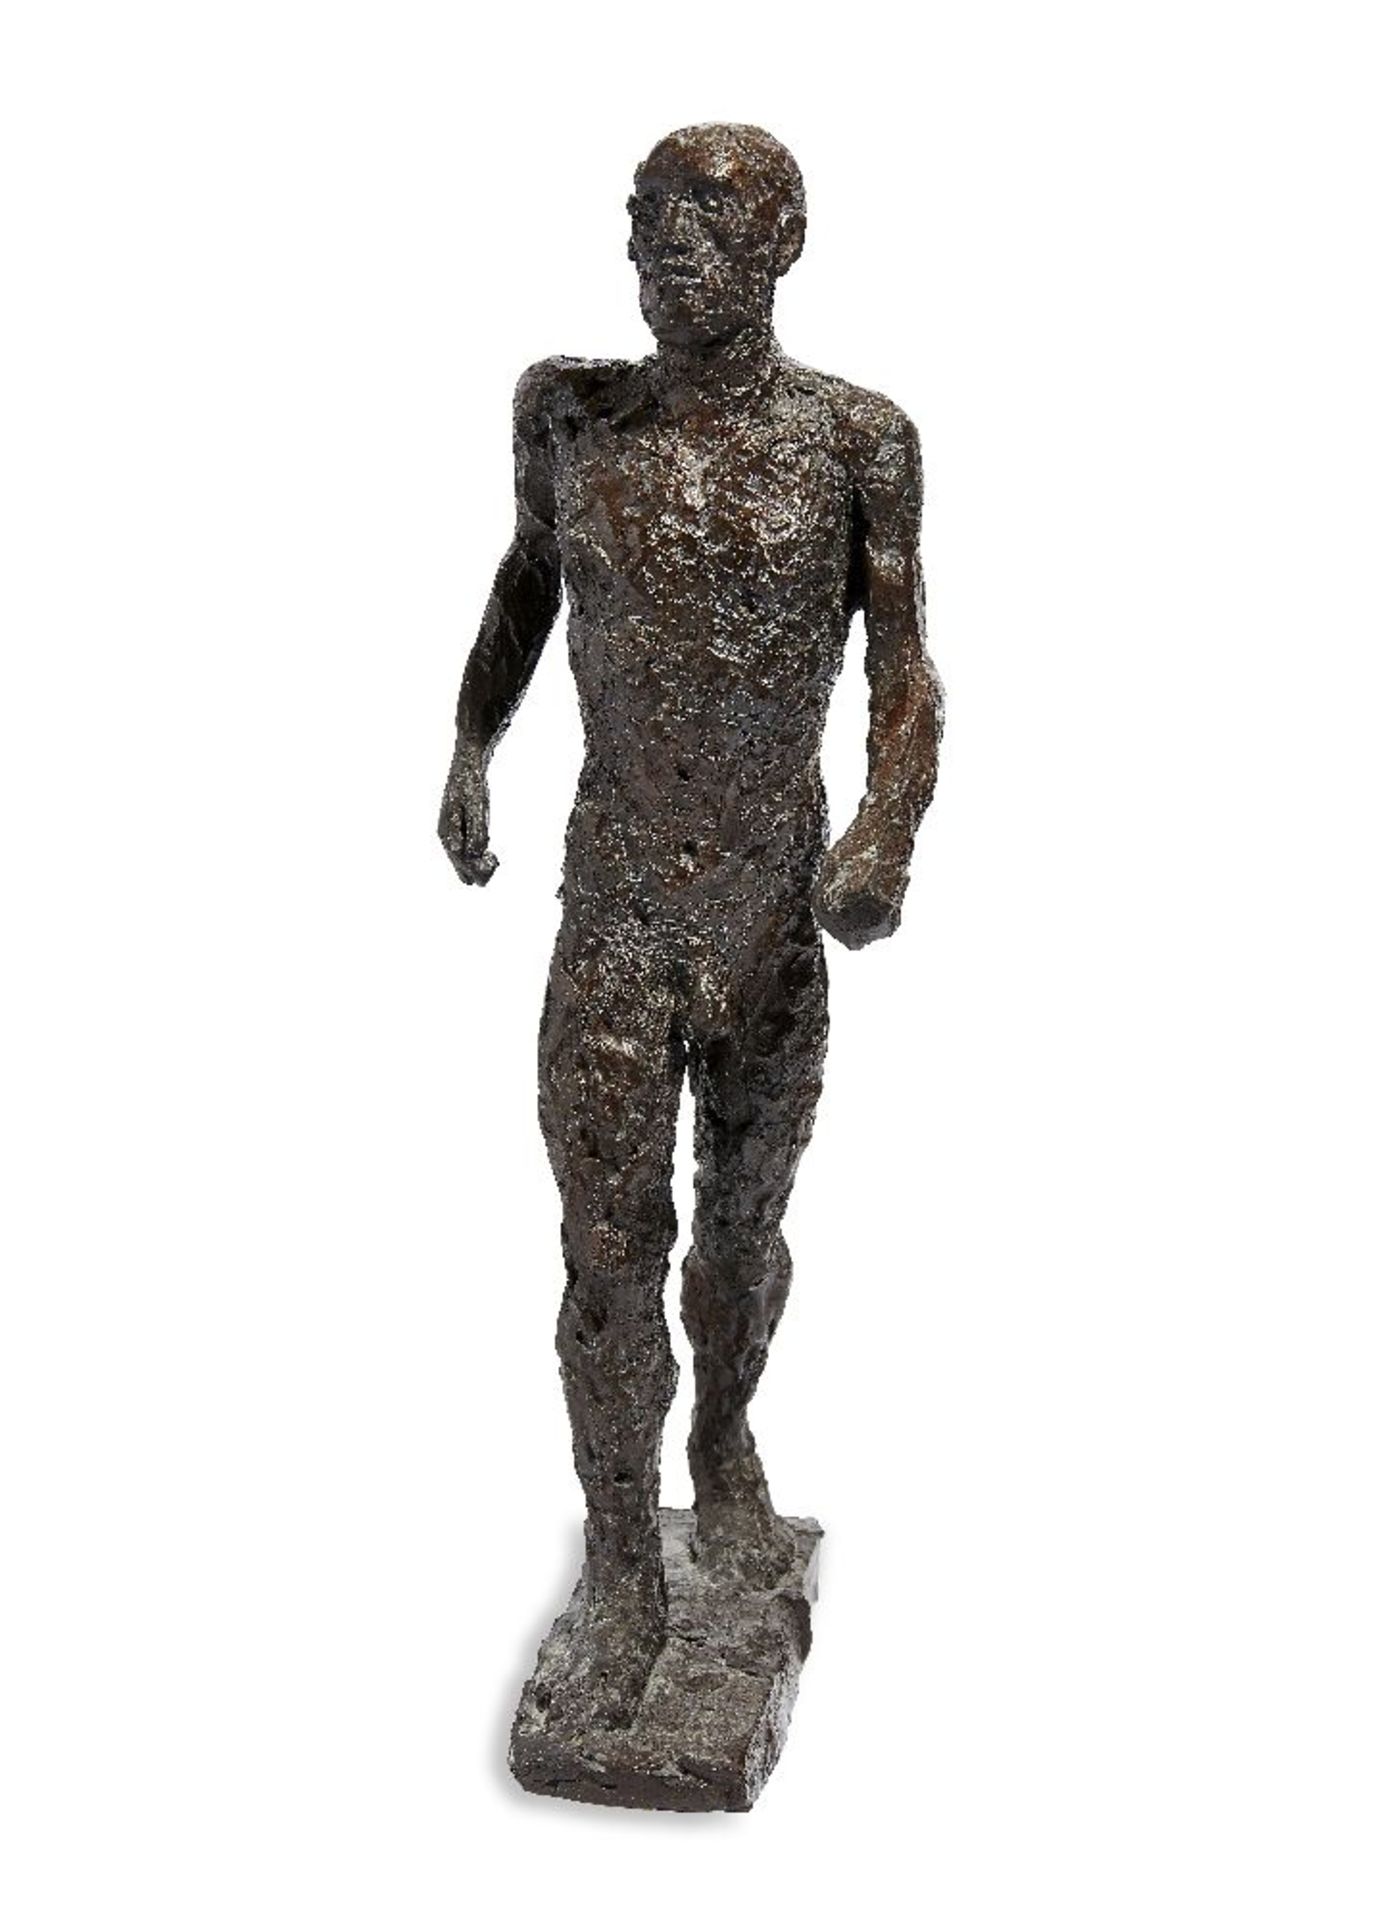 Dame Elisabeth Frink CH DBE RA, British 1930–1993 - Walking Man, 1989; bronze, signed and numbered - Image 4 of 6